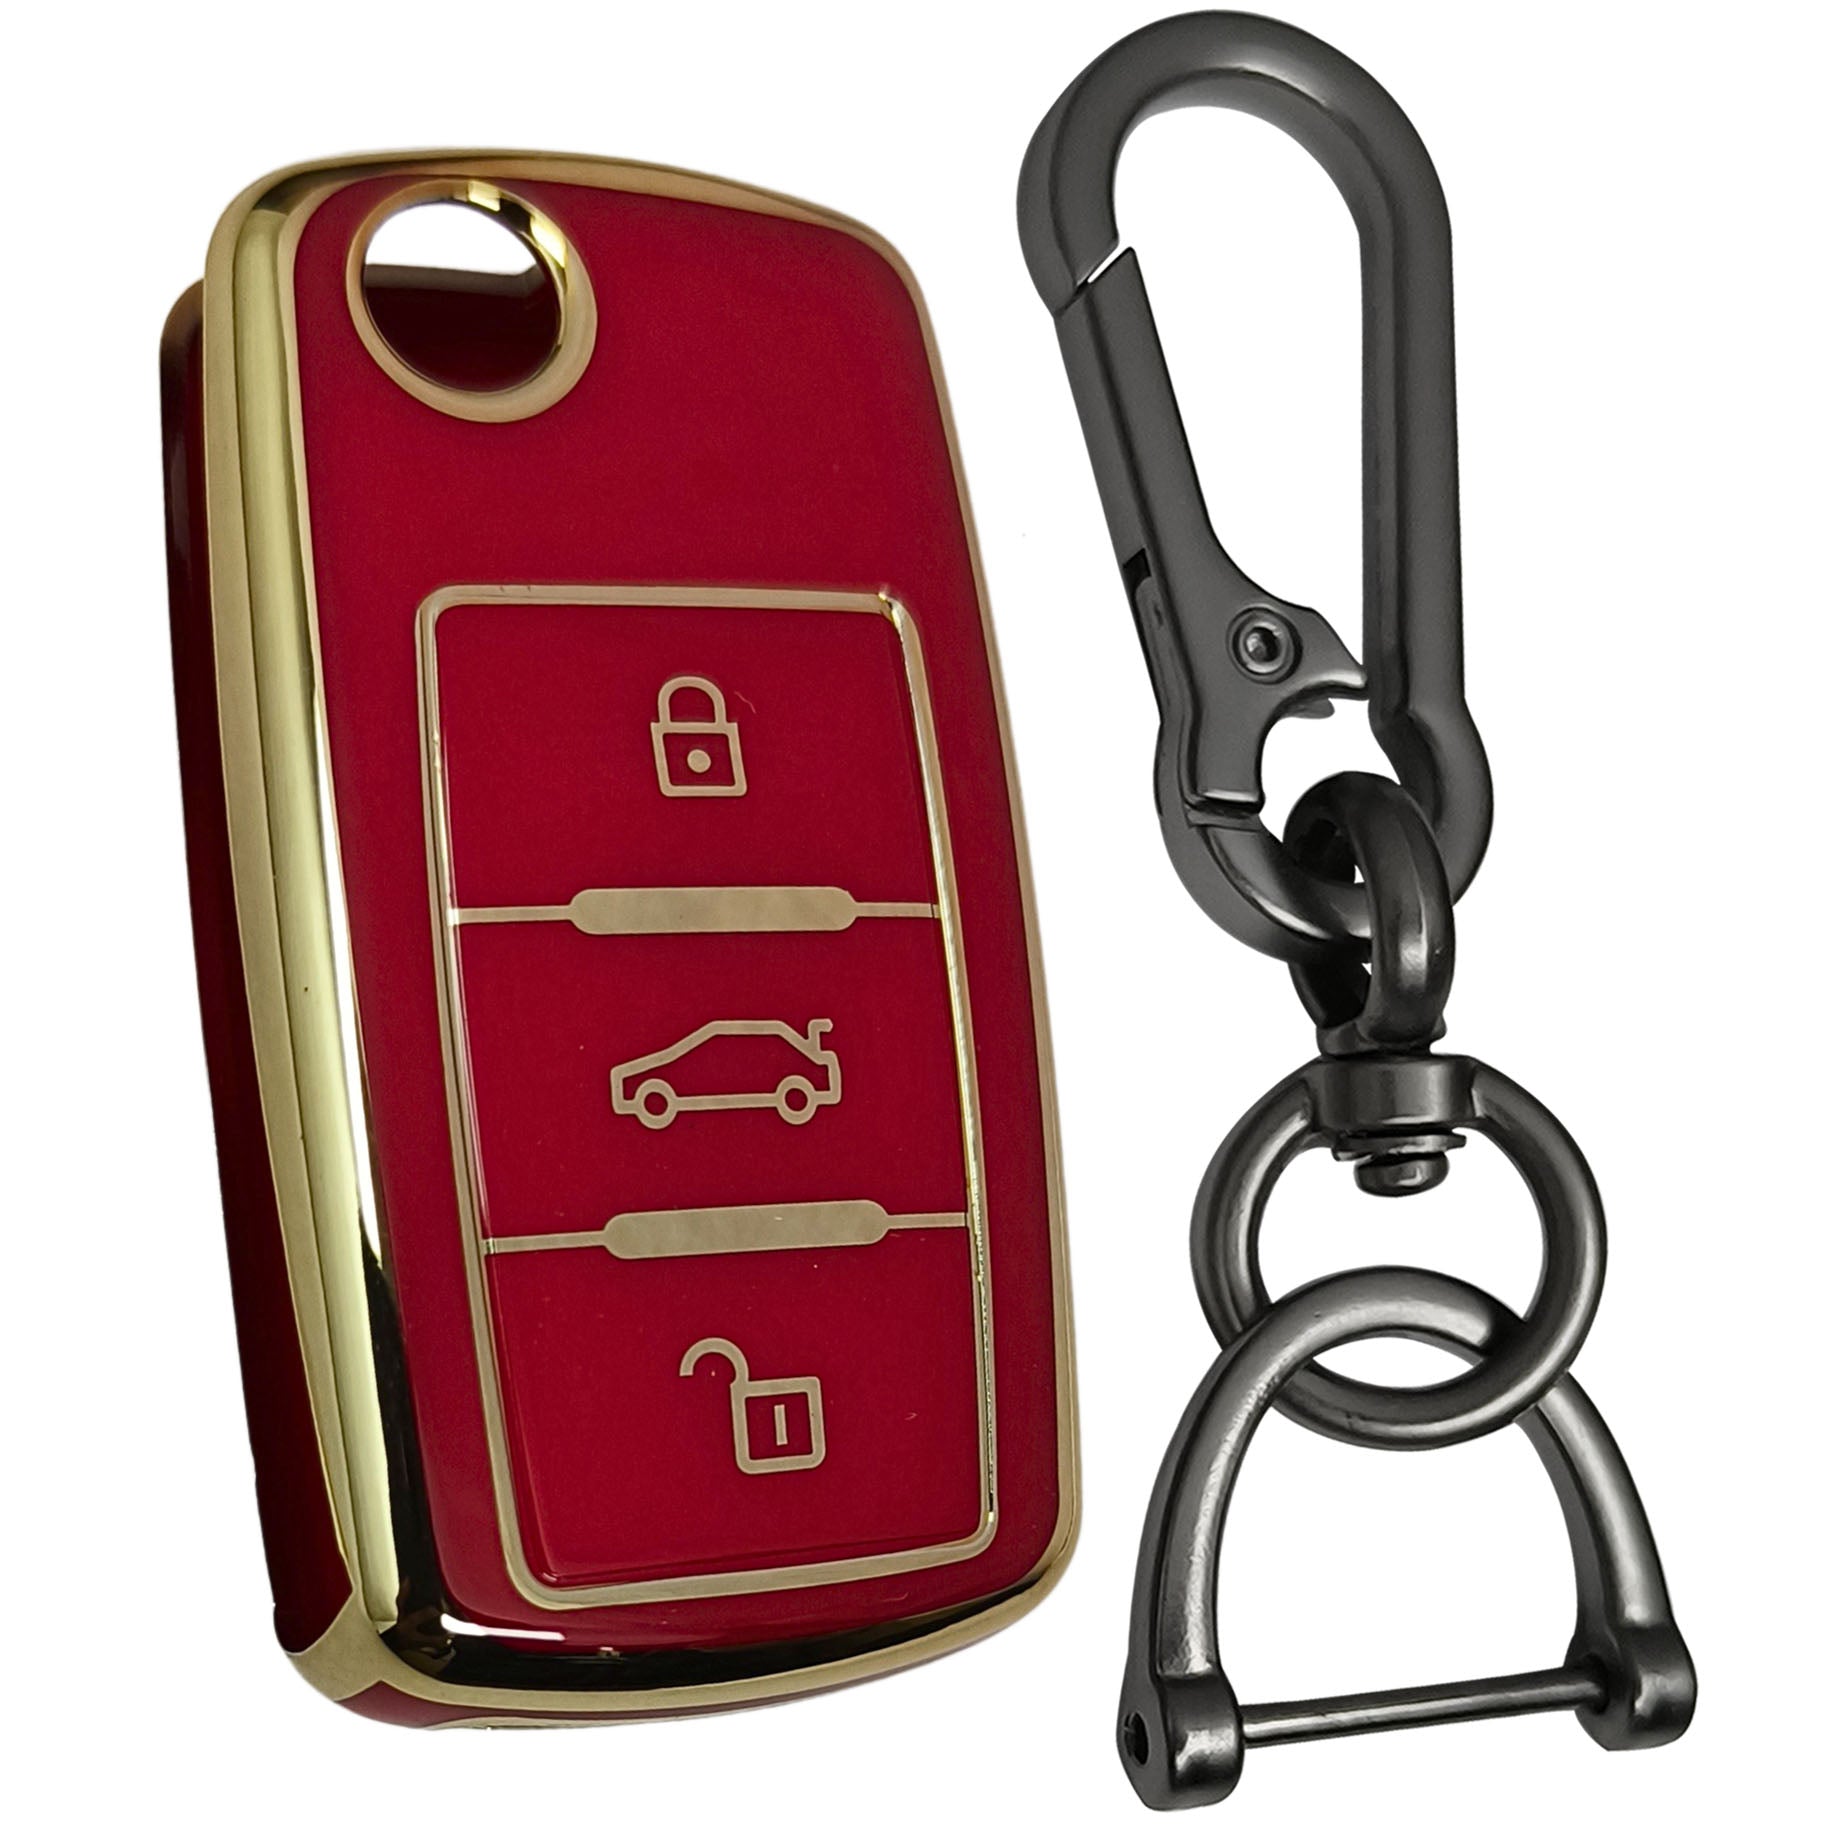 skoda octavia laura fabia 3 button flip key tpu red gold key cover case accessories keychain